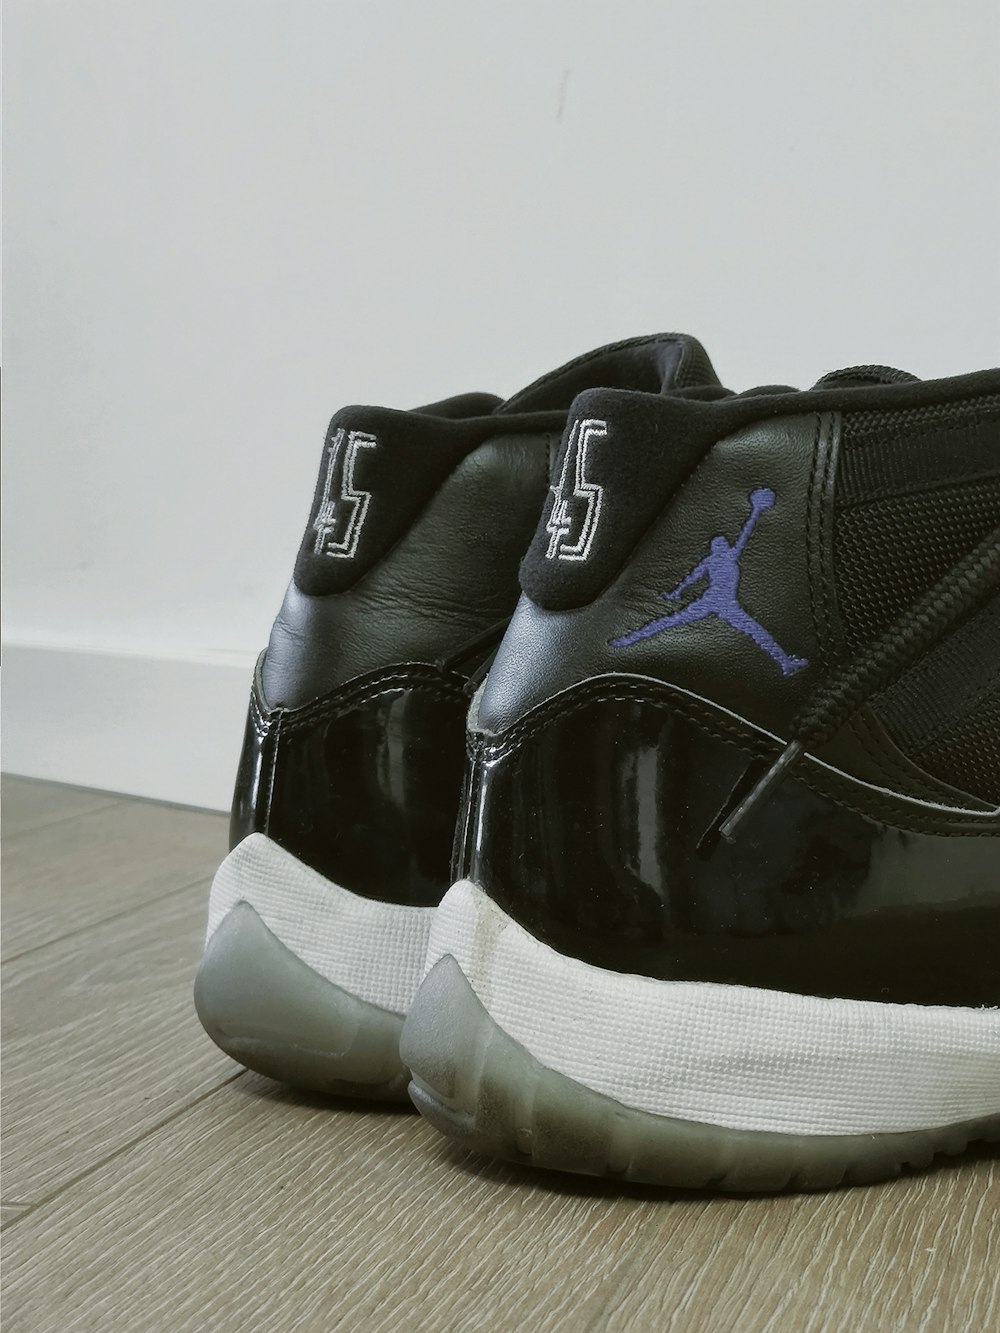 Pair of black Air Jordan basketball shoes photo – Free Suzhou shi Image on  Unsplash